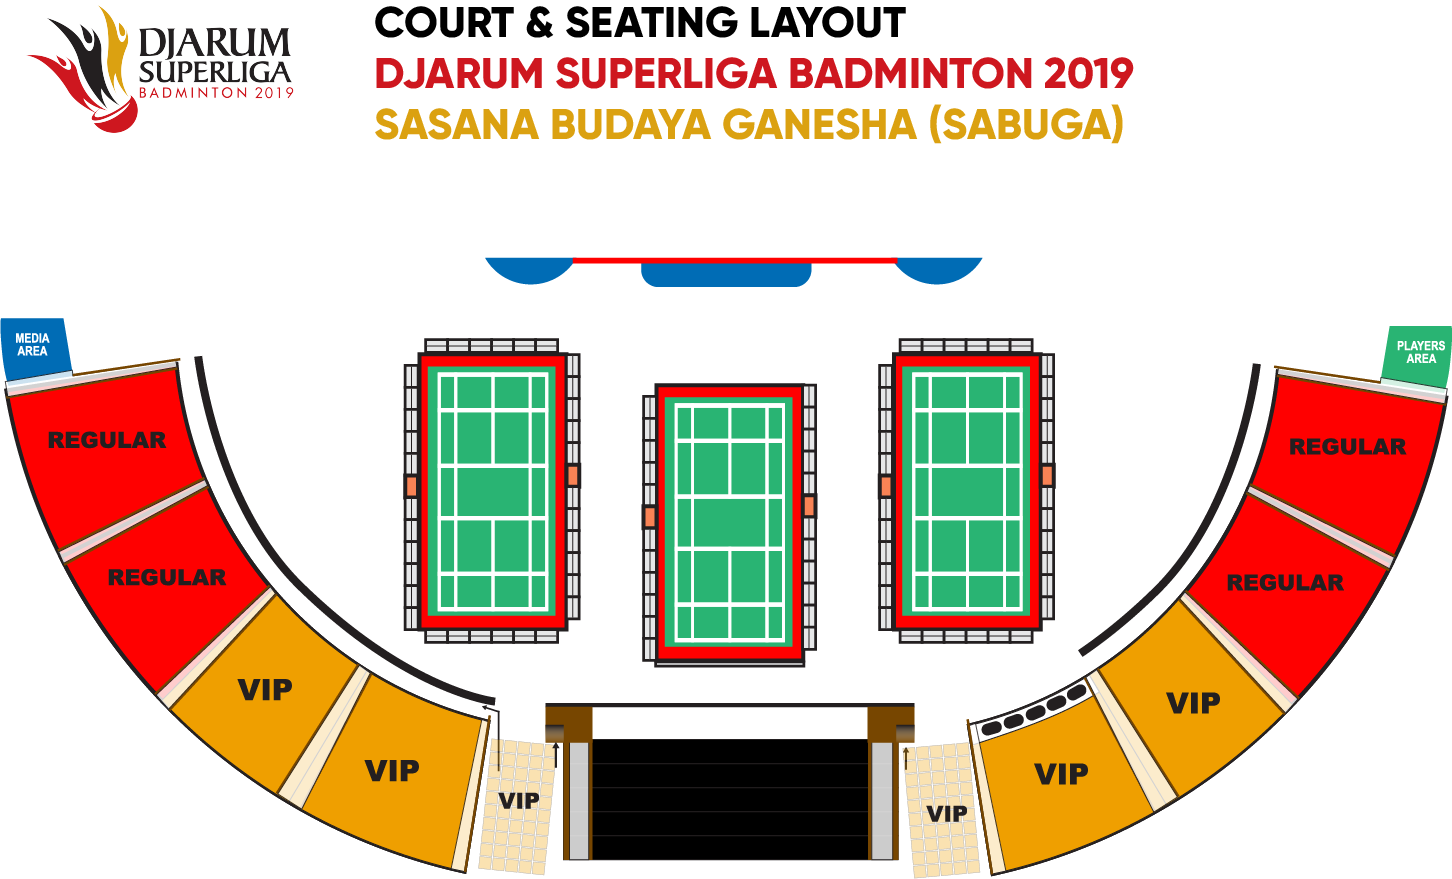 Djarum Superliga Badminton 2019 - Seat Layout